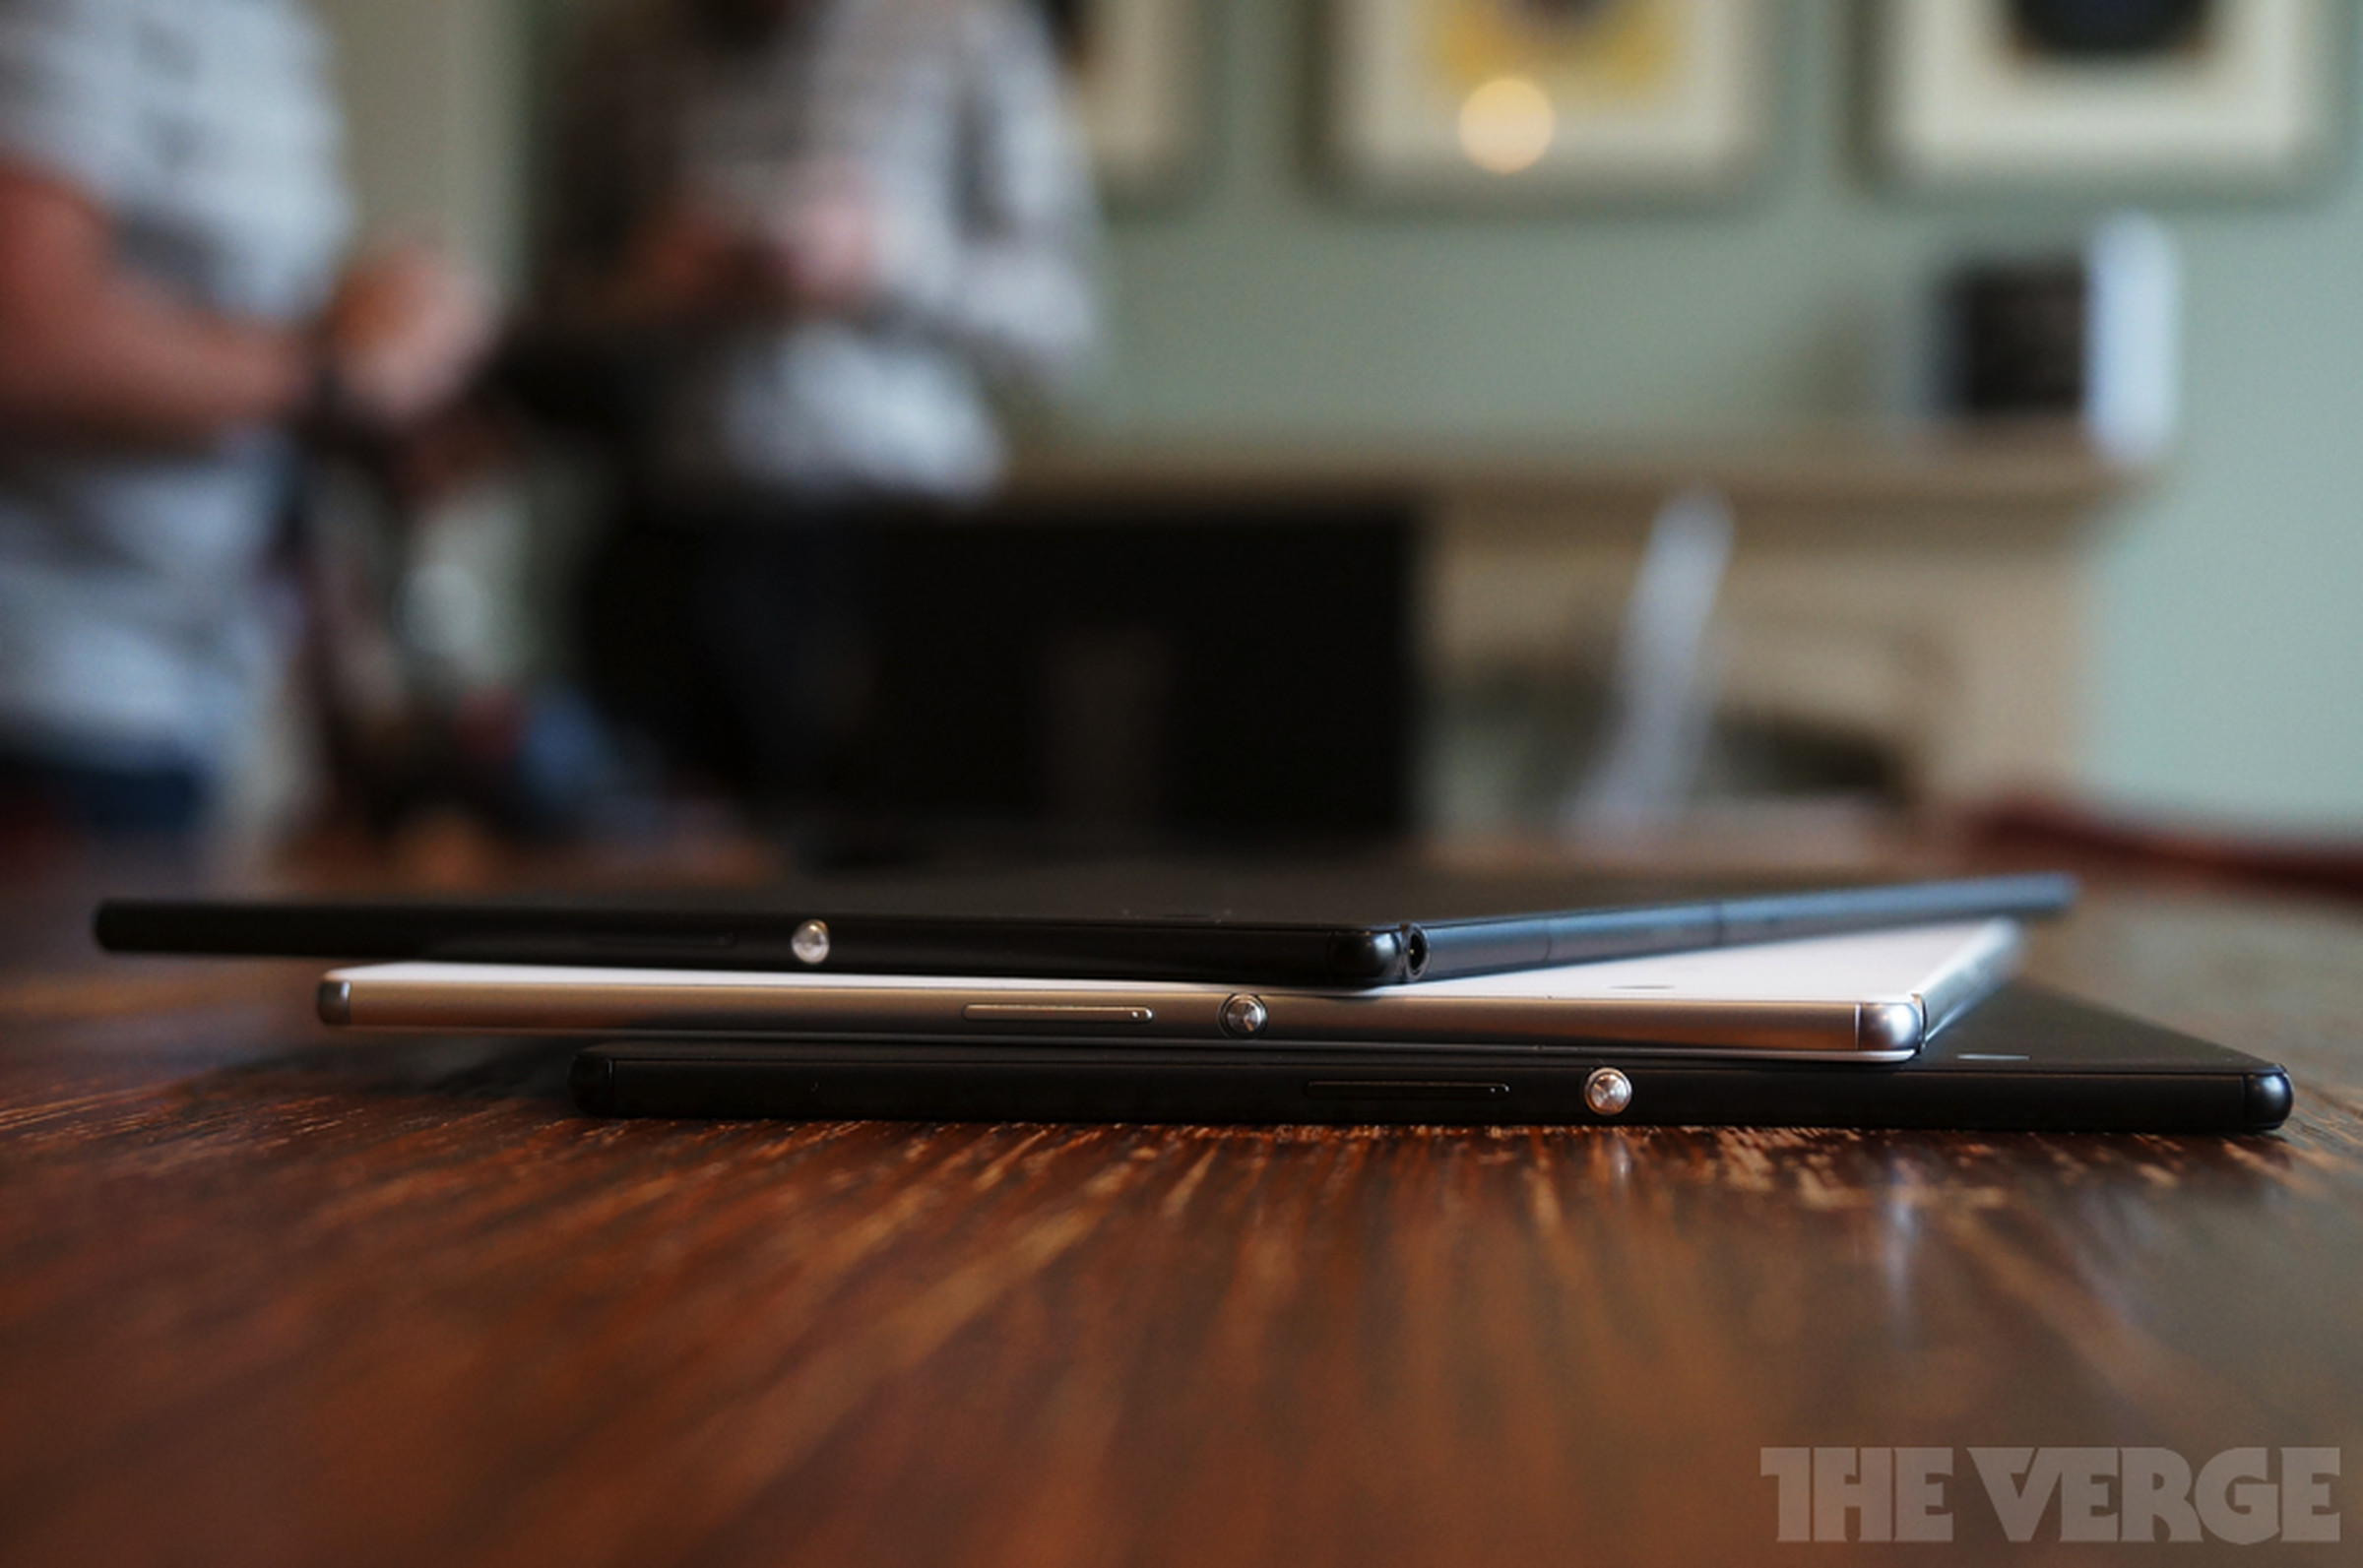 Sony Xperia Z4 Tablet hands-on photos